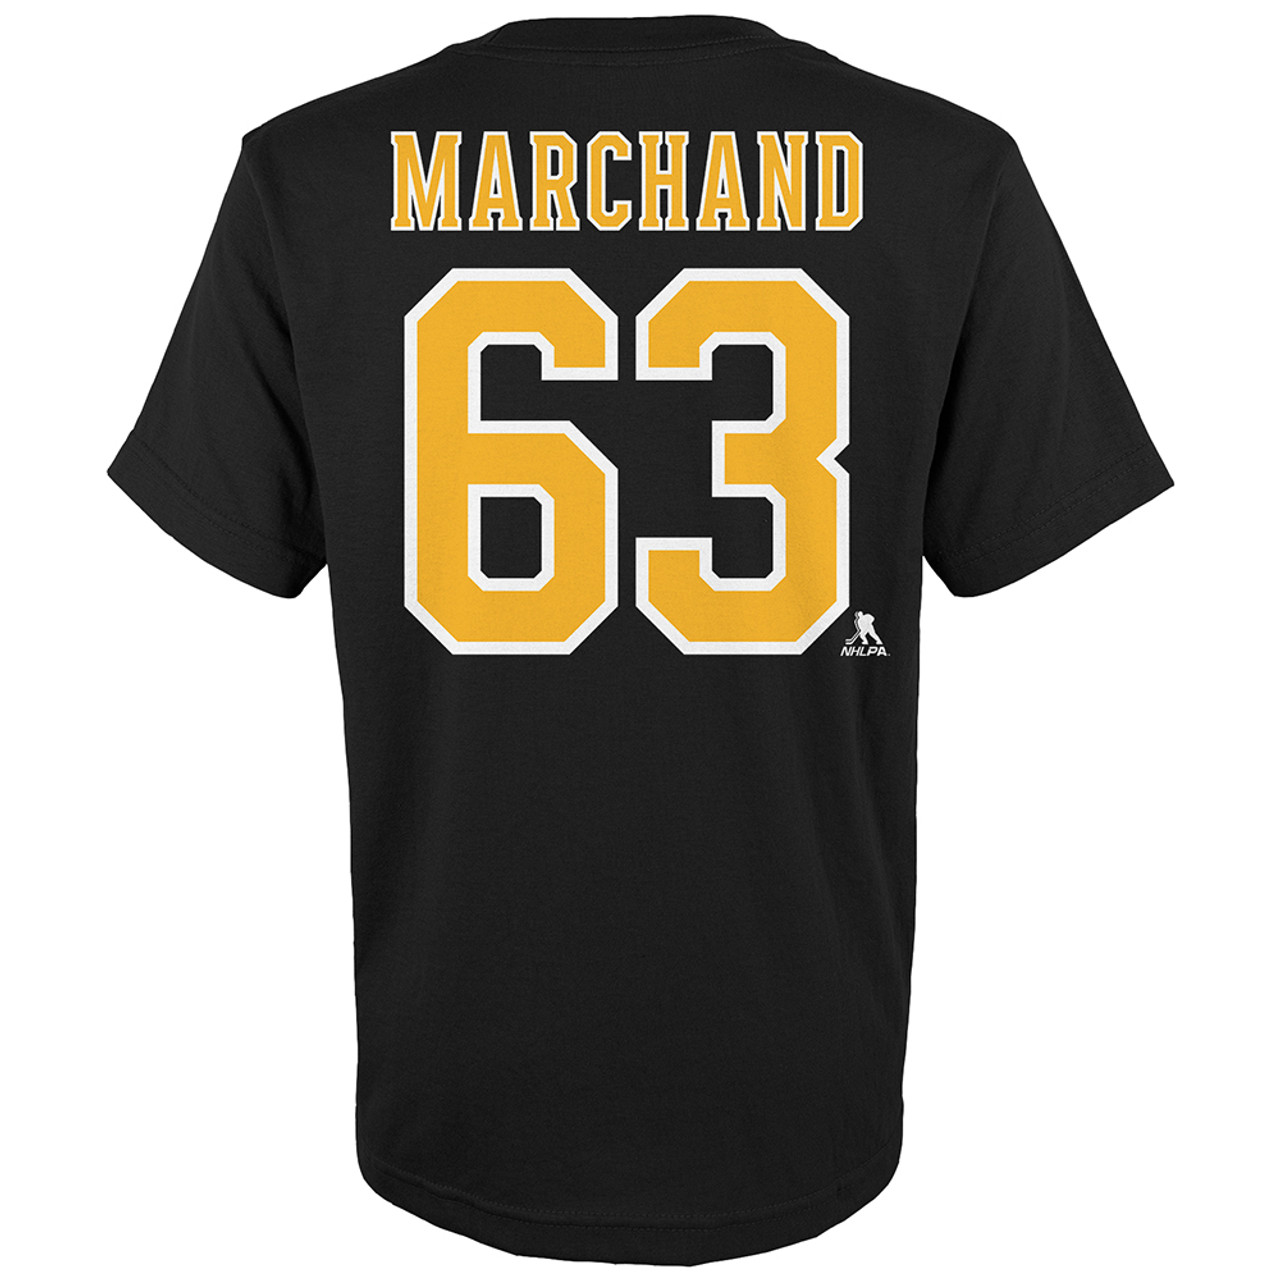 Brad Marchand Jerseys  Brad Marchand Boston Bruins Jerseys & Gear - Bruins  Store